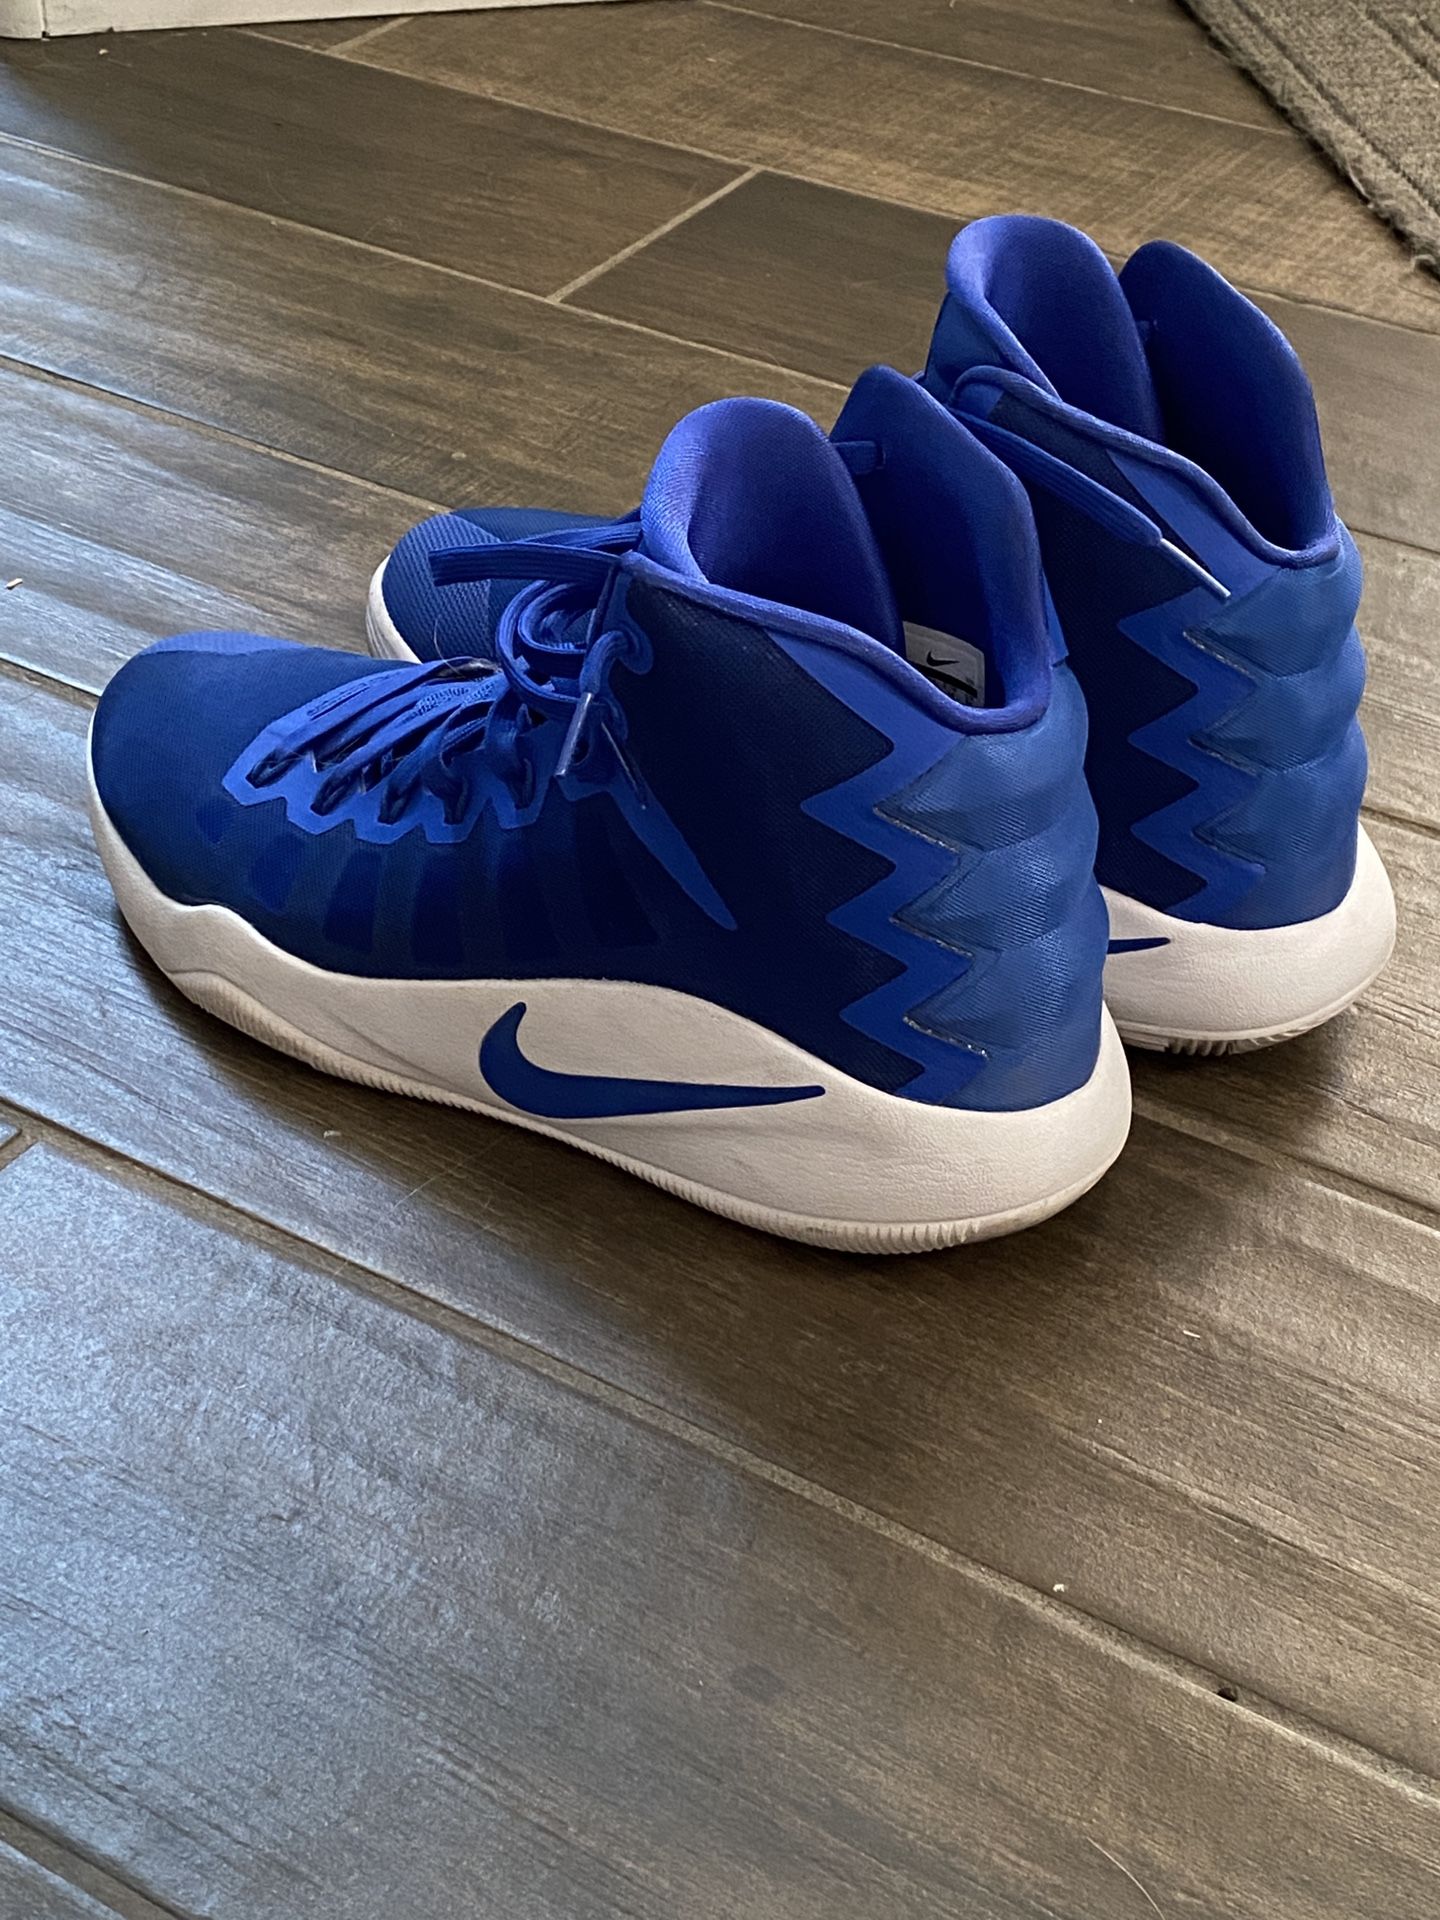 Nike Hyperdunk Men’s basketball shoes. Size 12